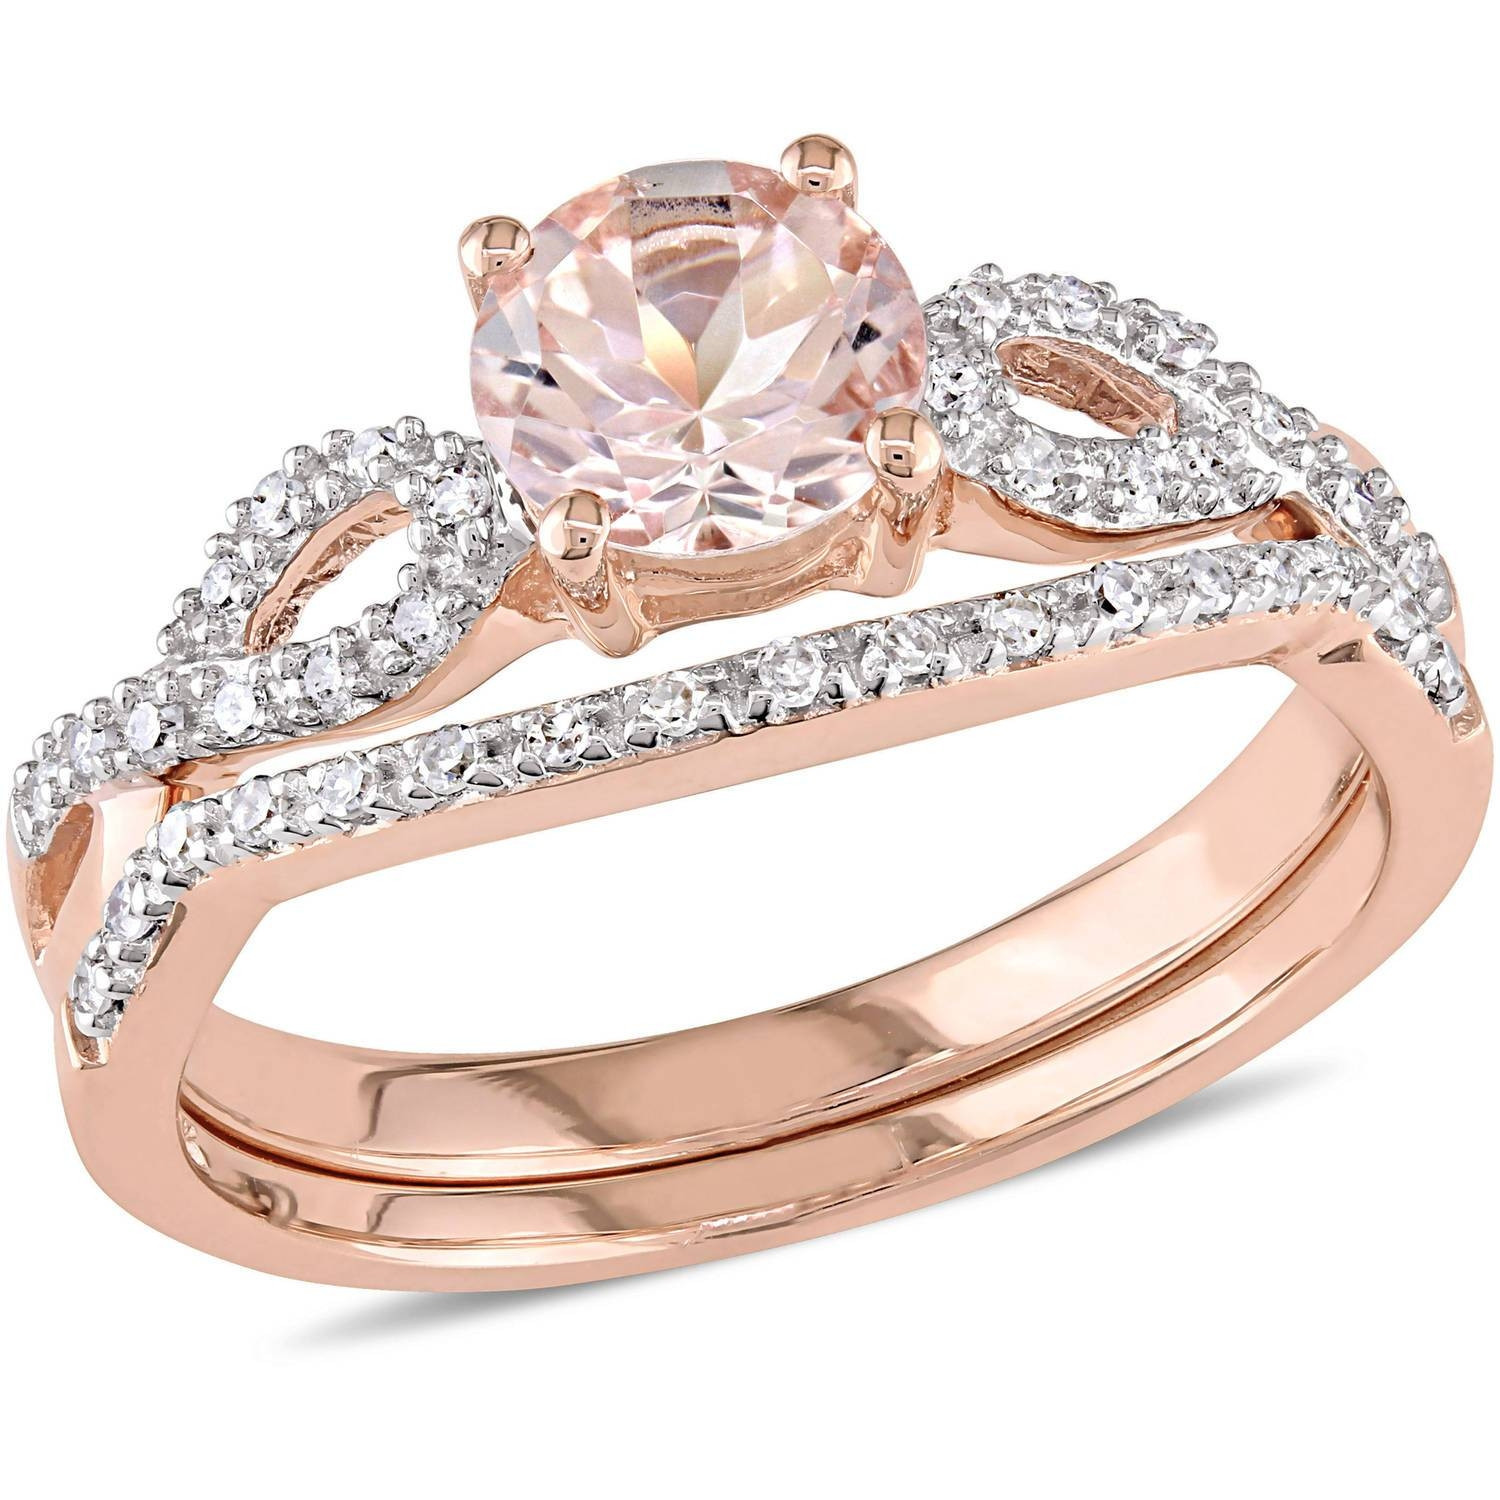 Diamond Rings At Walmart
 15 Inspirations of Wedding Bands For Women Walmart